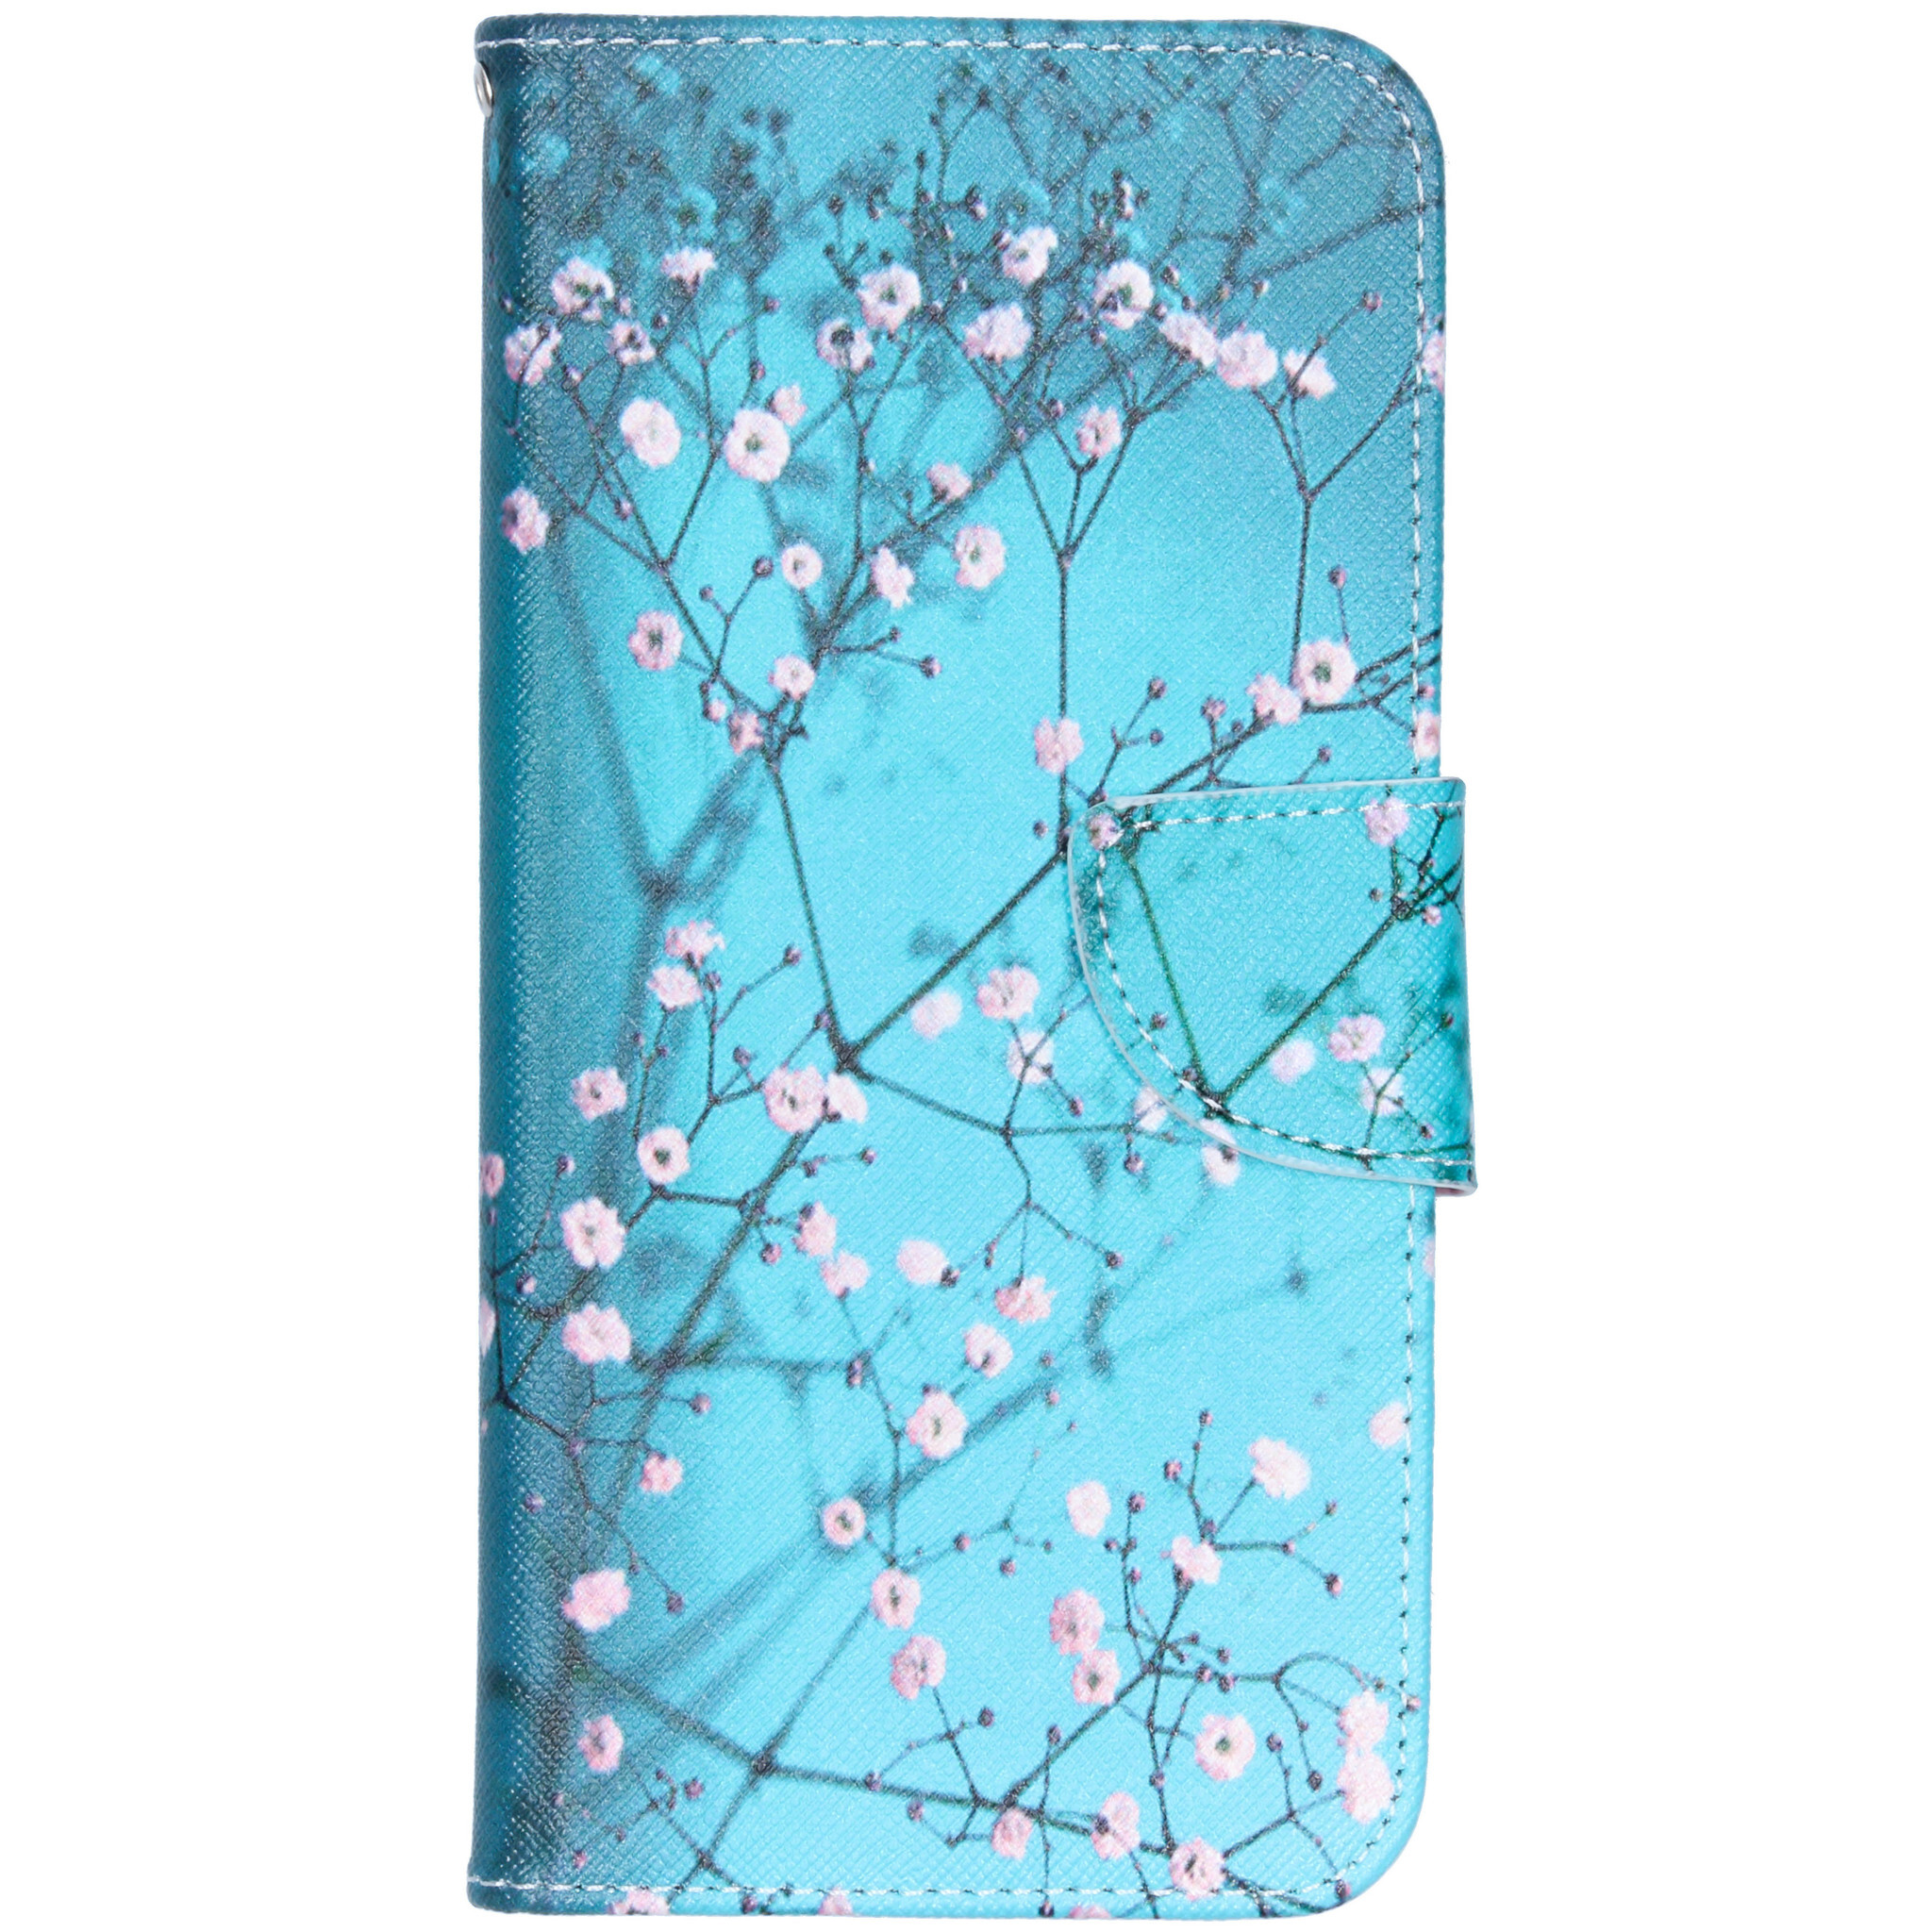 - Design Softcase Booktype hoesje voor de Samsung Galaxy A50 - Bloesem